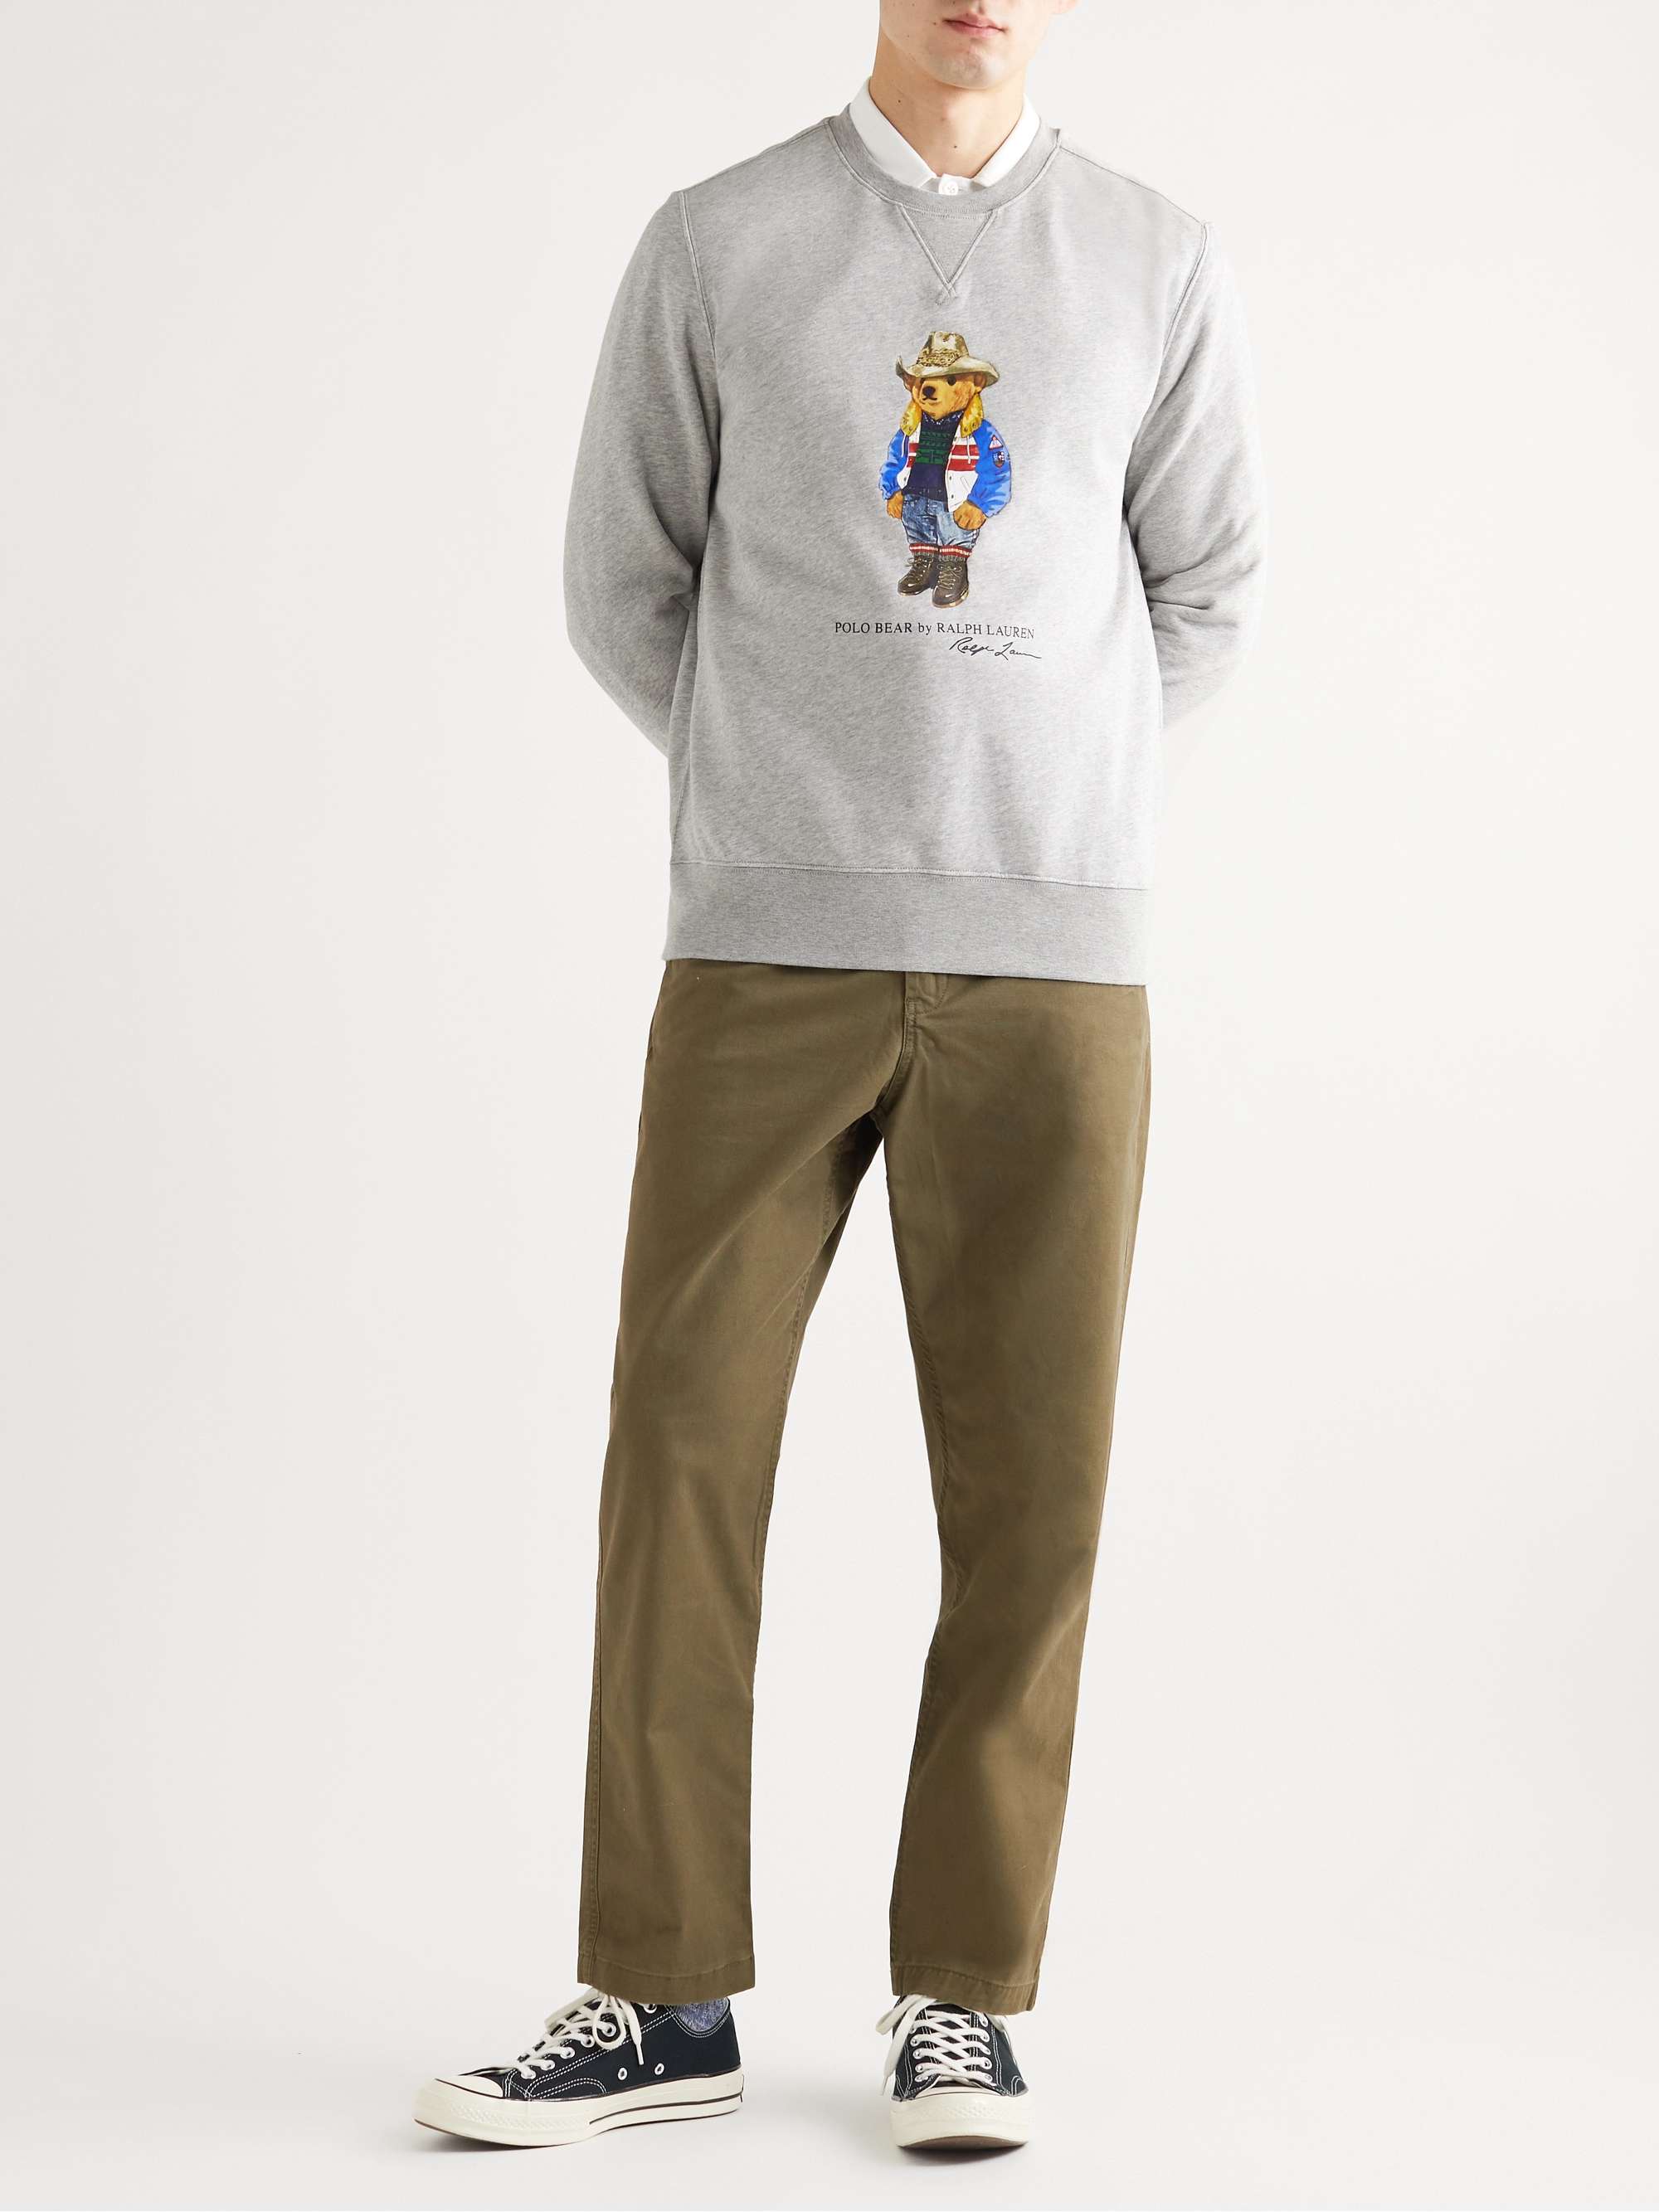 POLO RALPH LAUREN Printed Cotton-Blend Jersey Sweatshirt